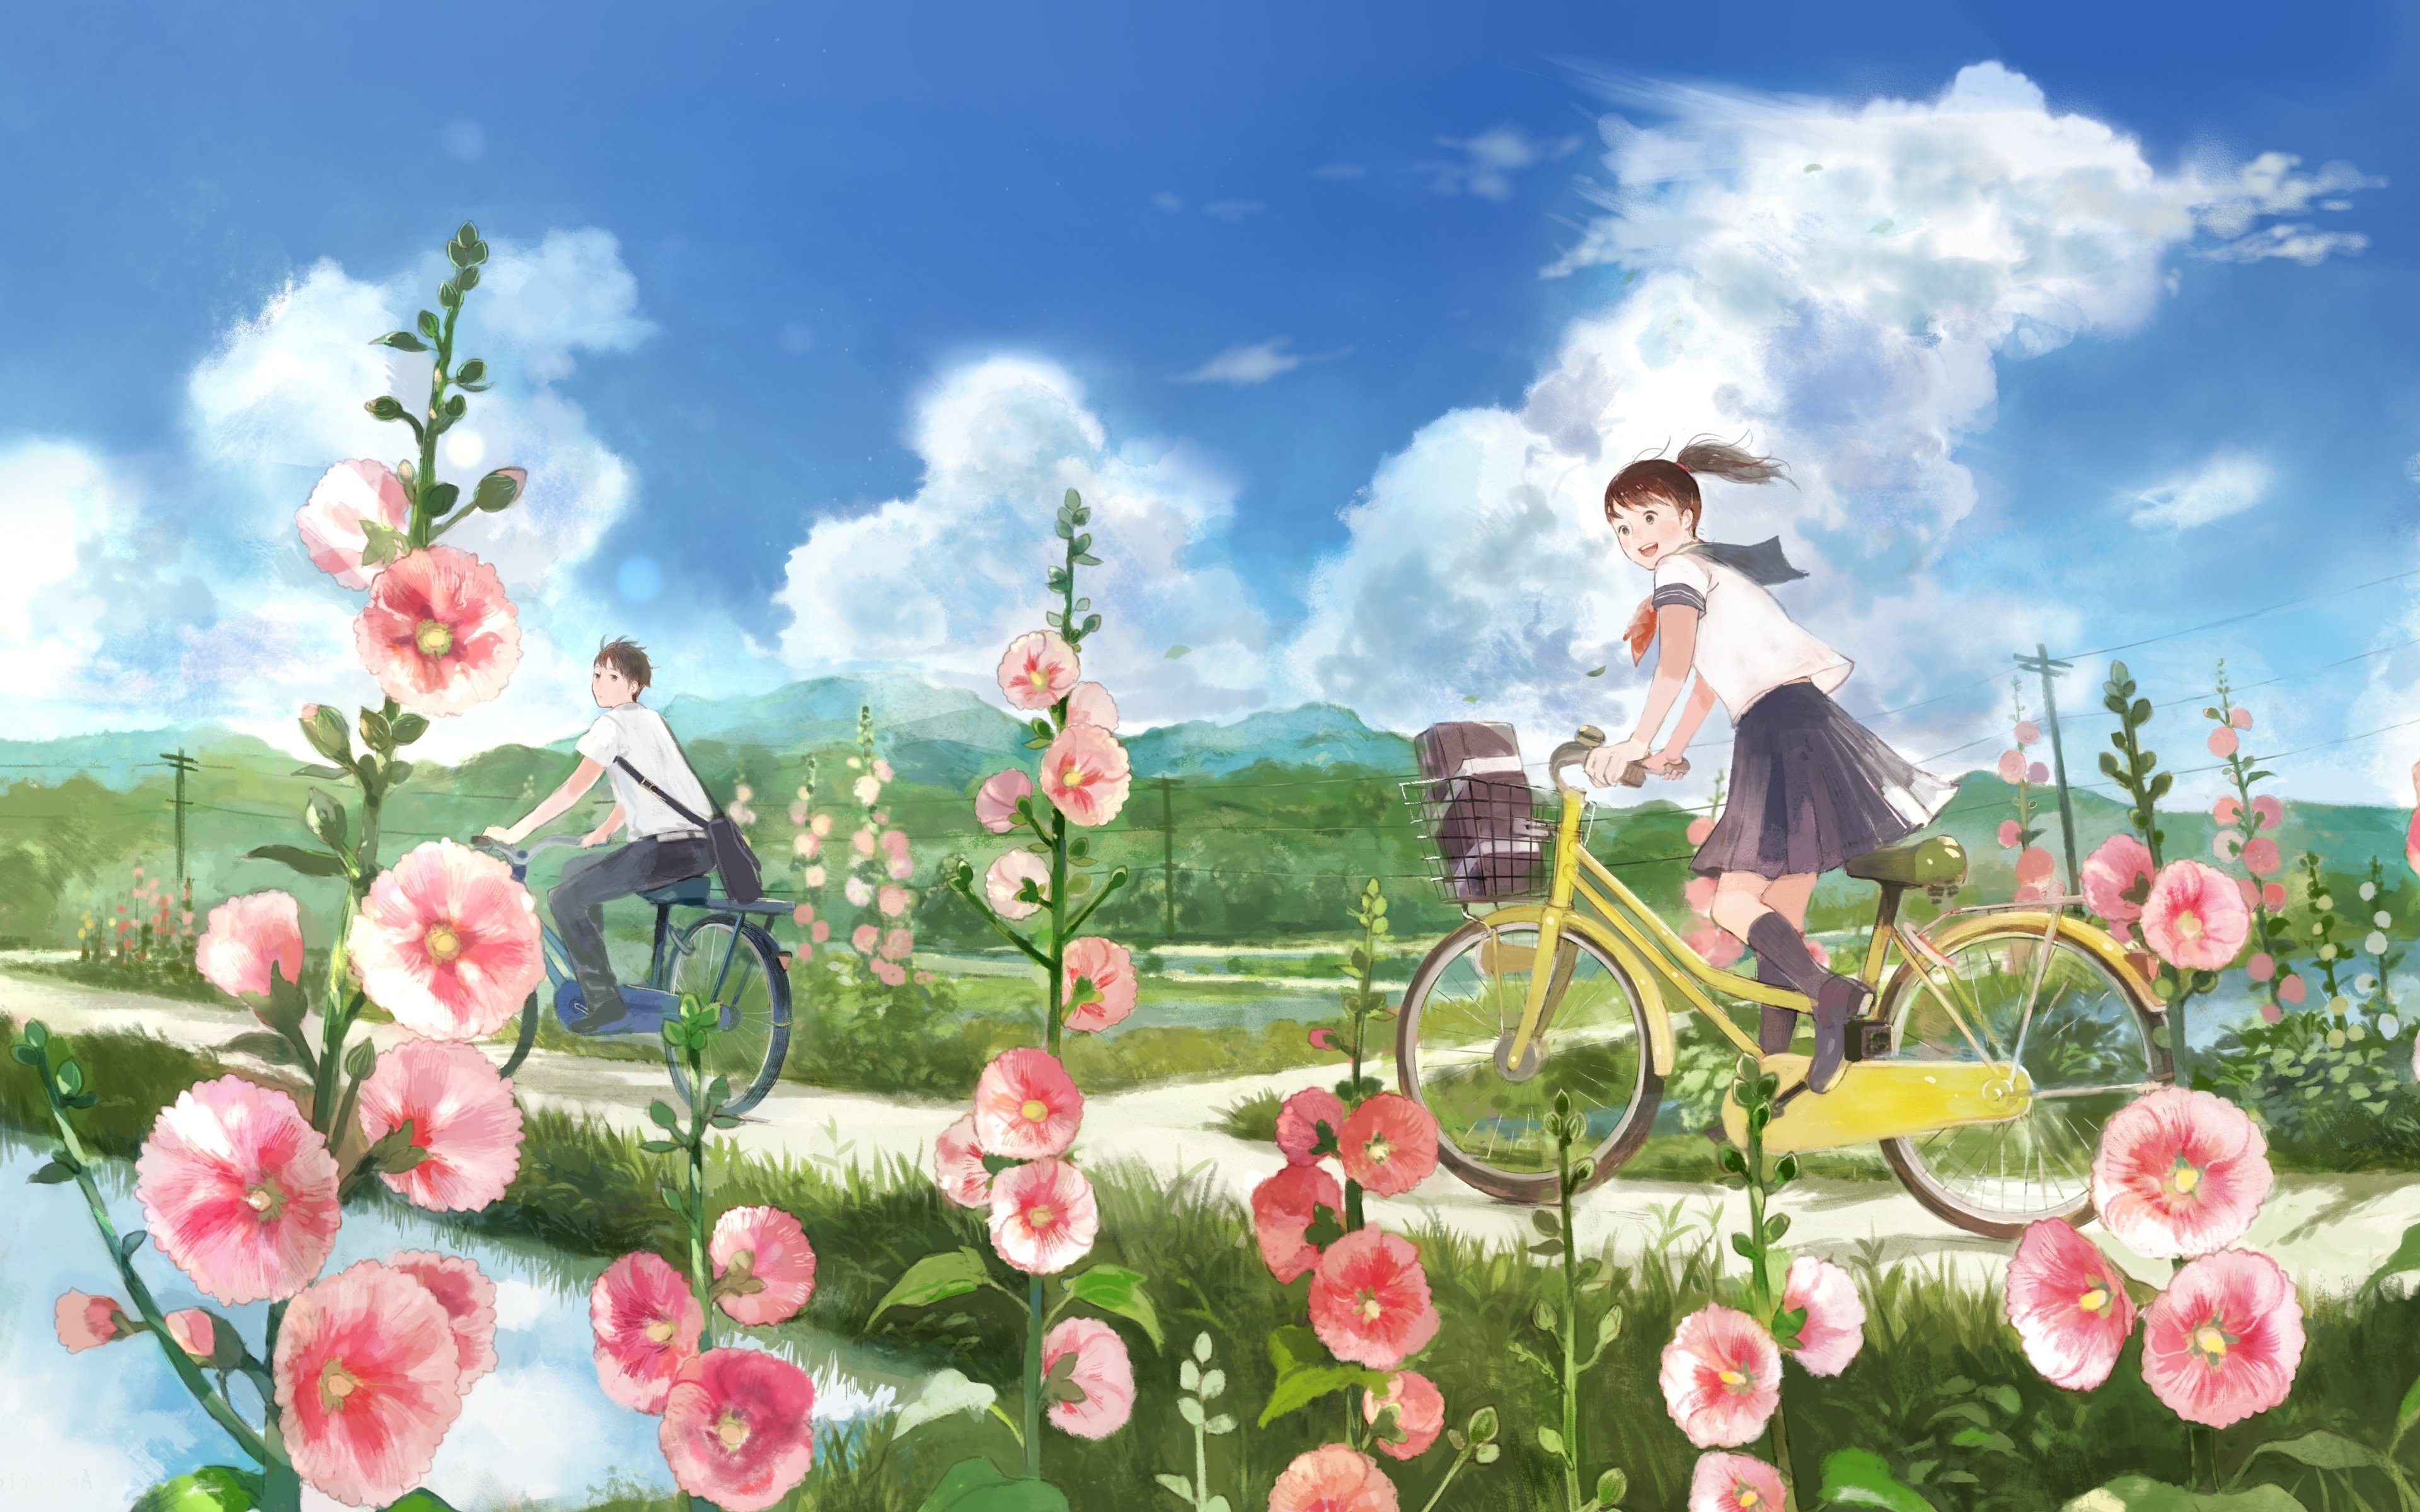 Wallpaper Anime Couple, Landscape, Biking, Scenic, Flowers, Summer, Clouds, School Uniform:4613x2976